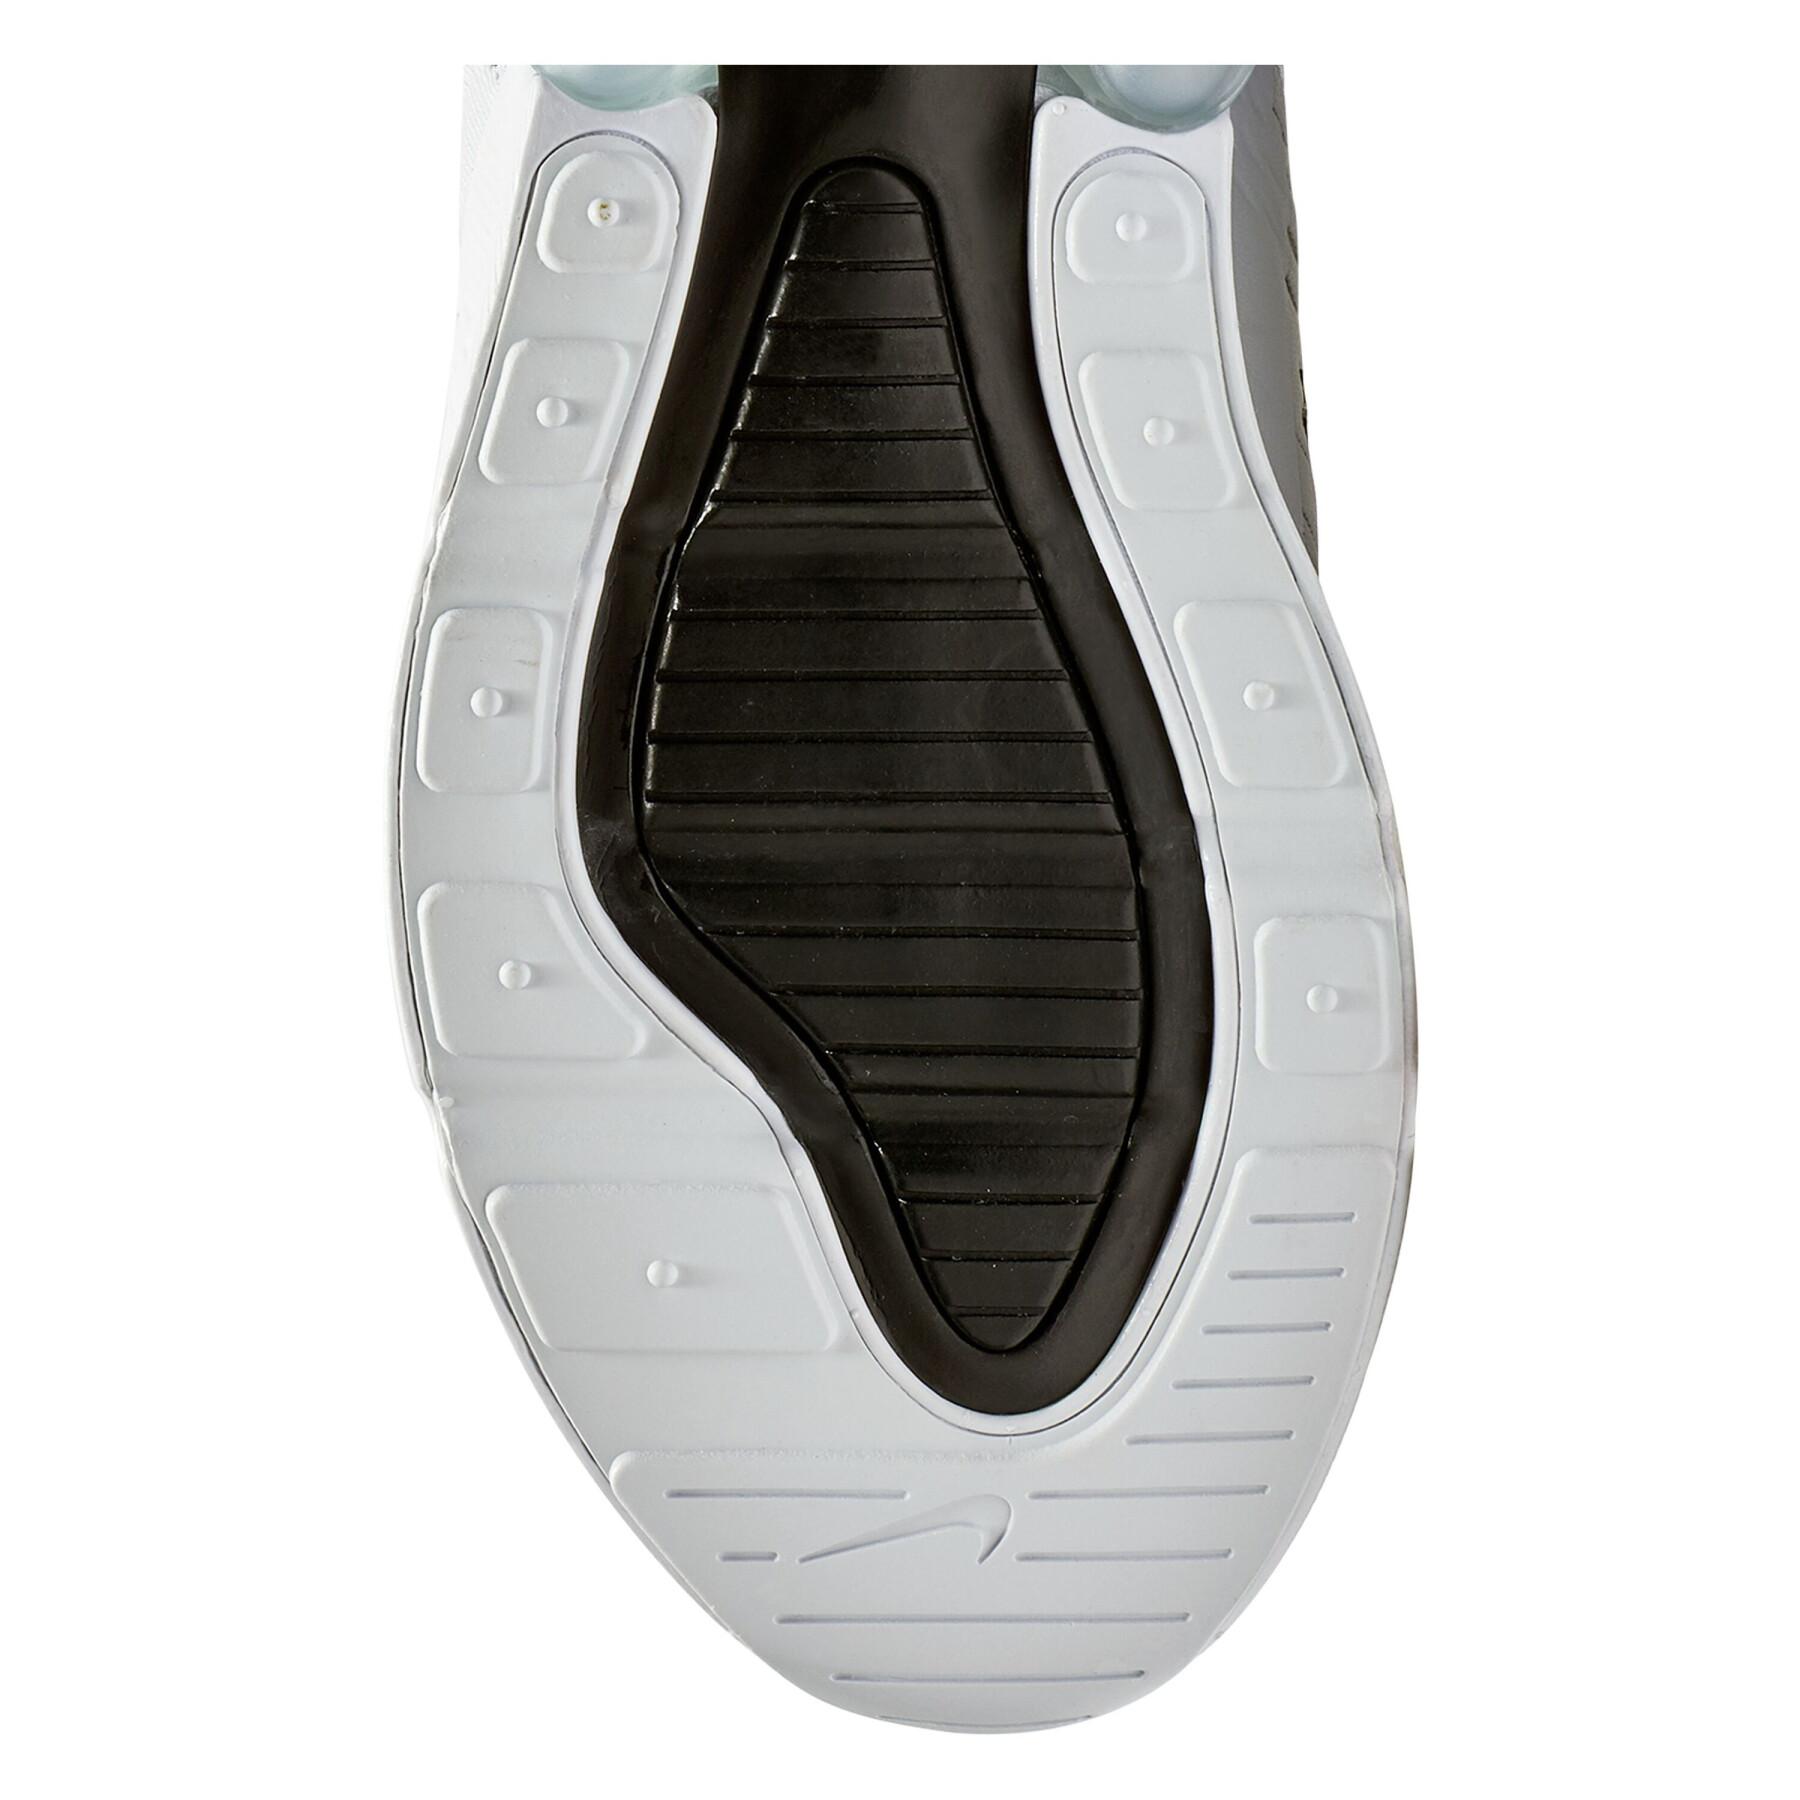 Scarpe da ginnastica Nike Air Max 270